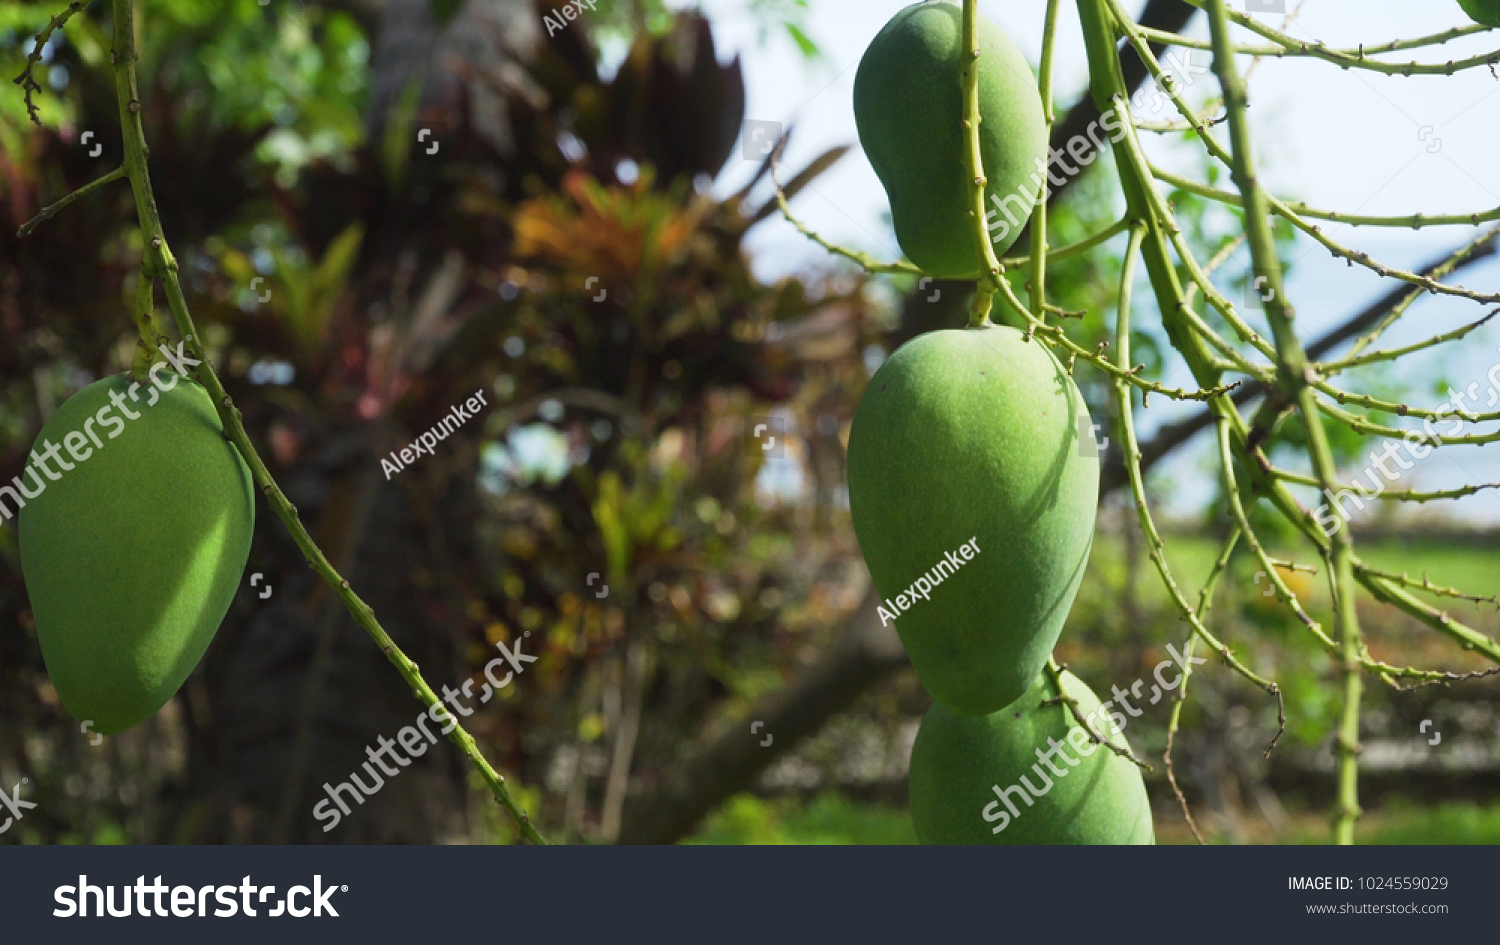 Mango Tree Fruits Bunch Green Mango Stock Image Download Now